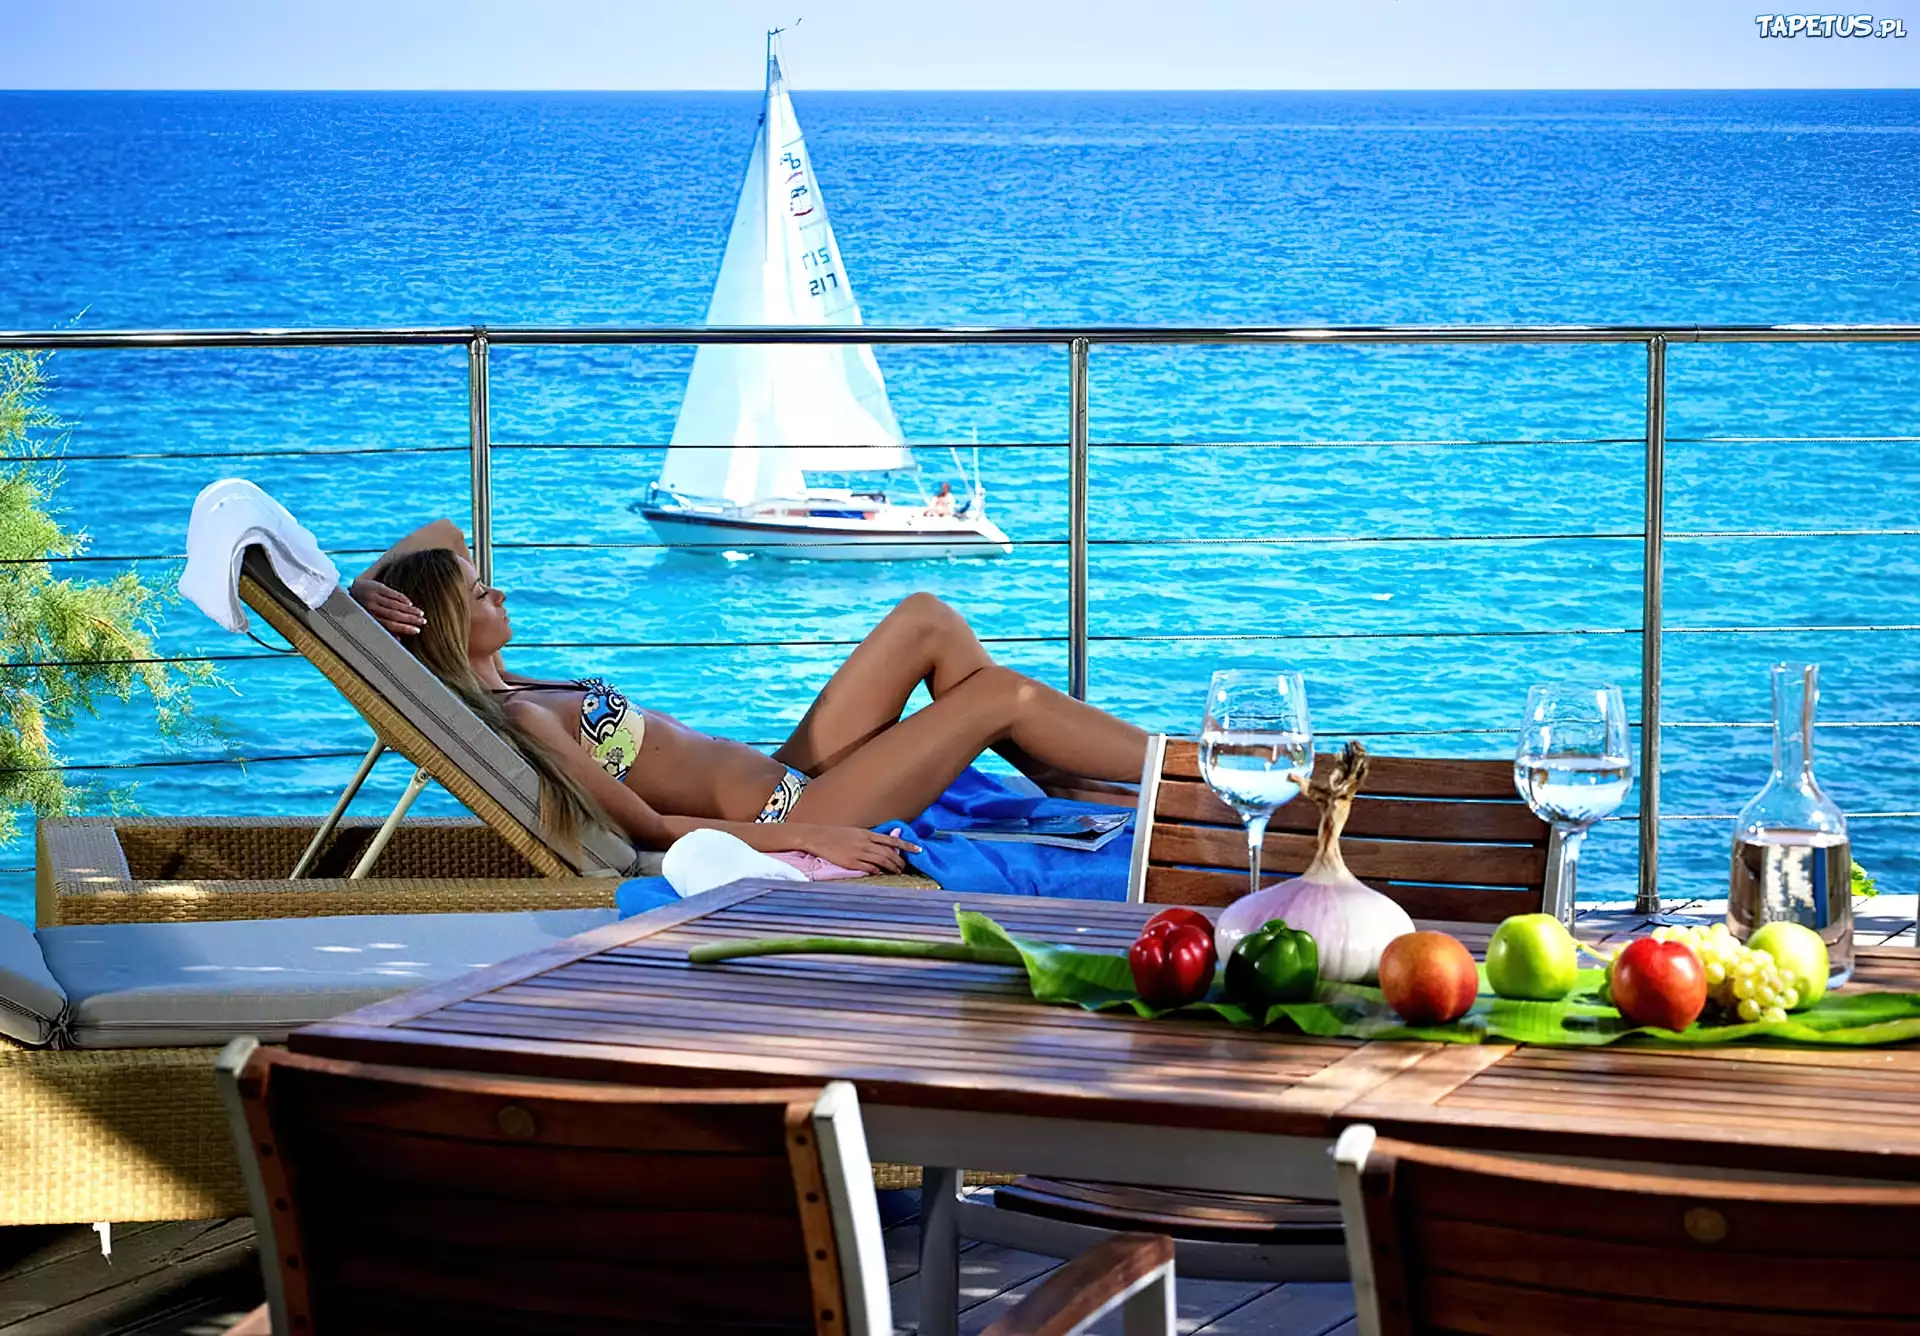 Ди в отпуске. Шикарный вид на море. Столик с видом на море. Шикарный отдых. Завтрак на террасе с видом на море.